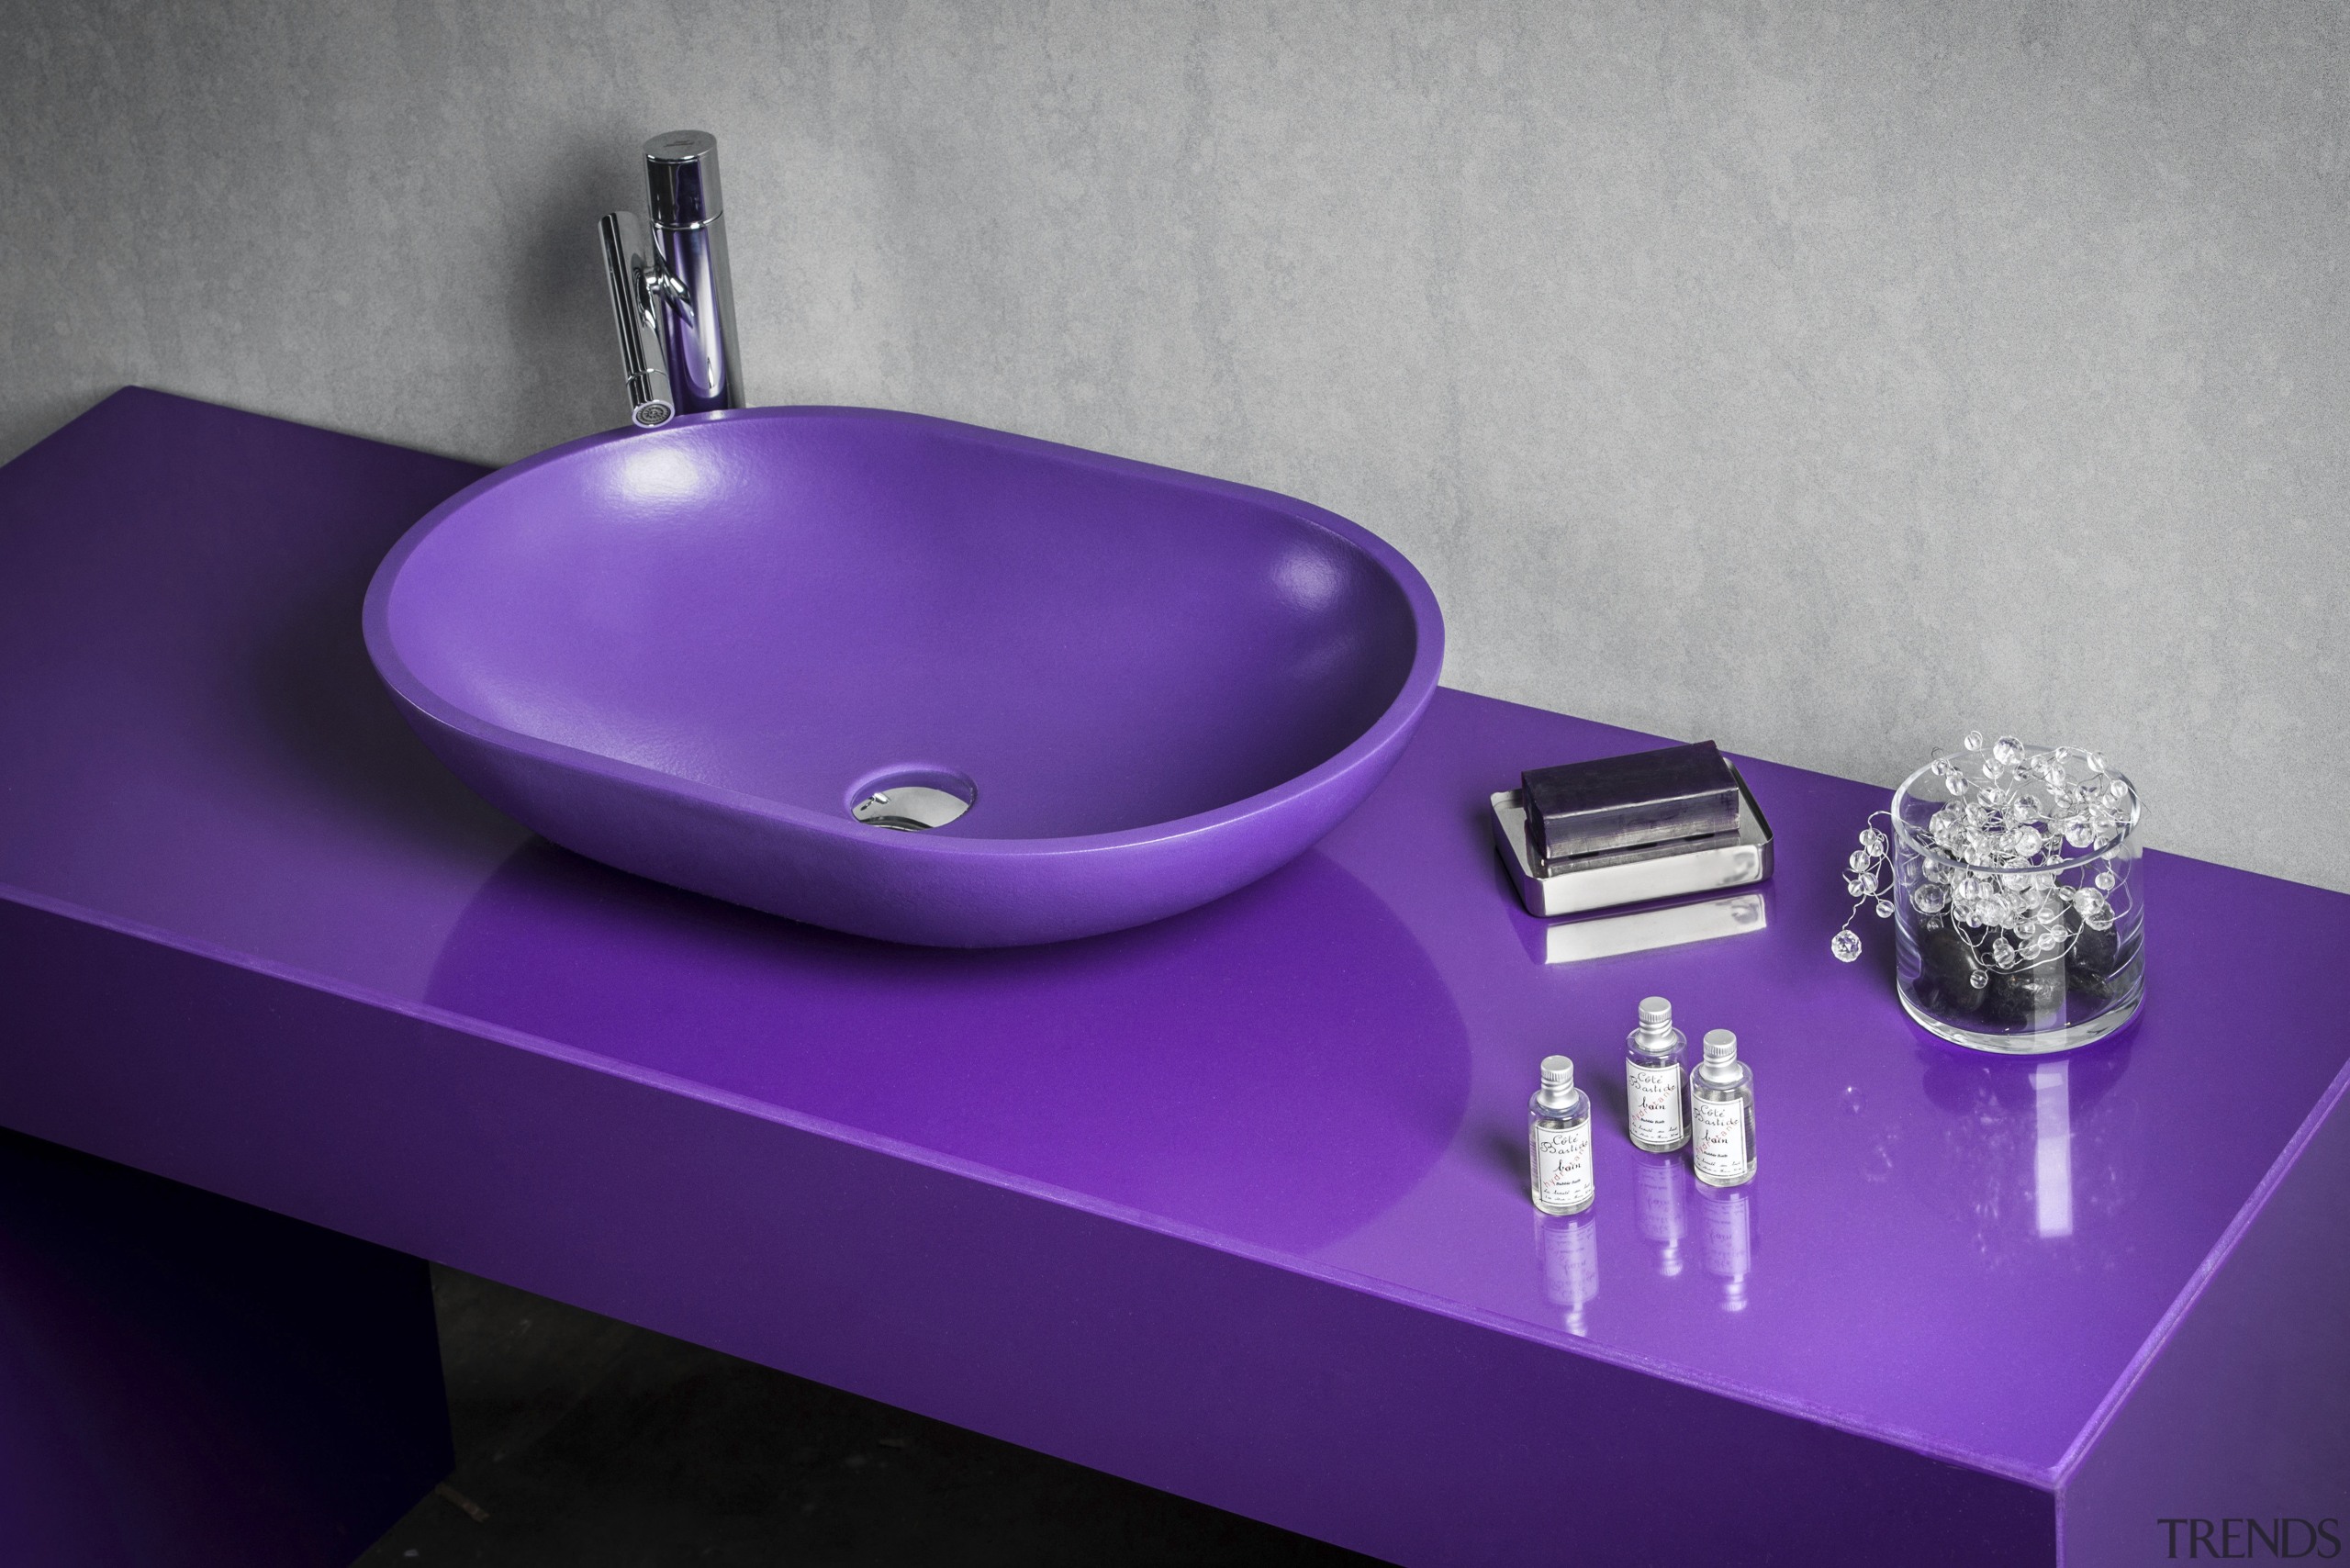 U Design sink units by Stone Italiana provide bathroom sink, plumbing fixture, product, product design, purple, sink, purple, gray